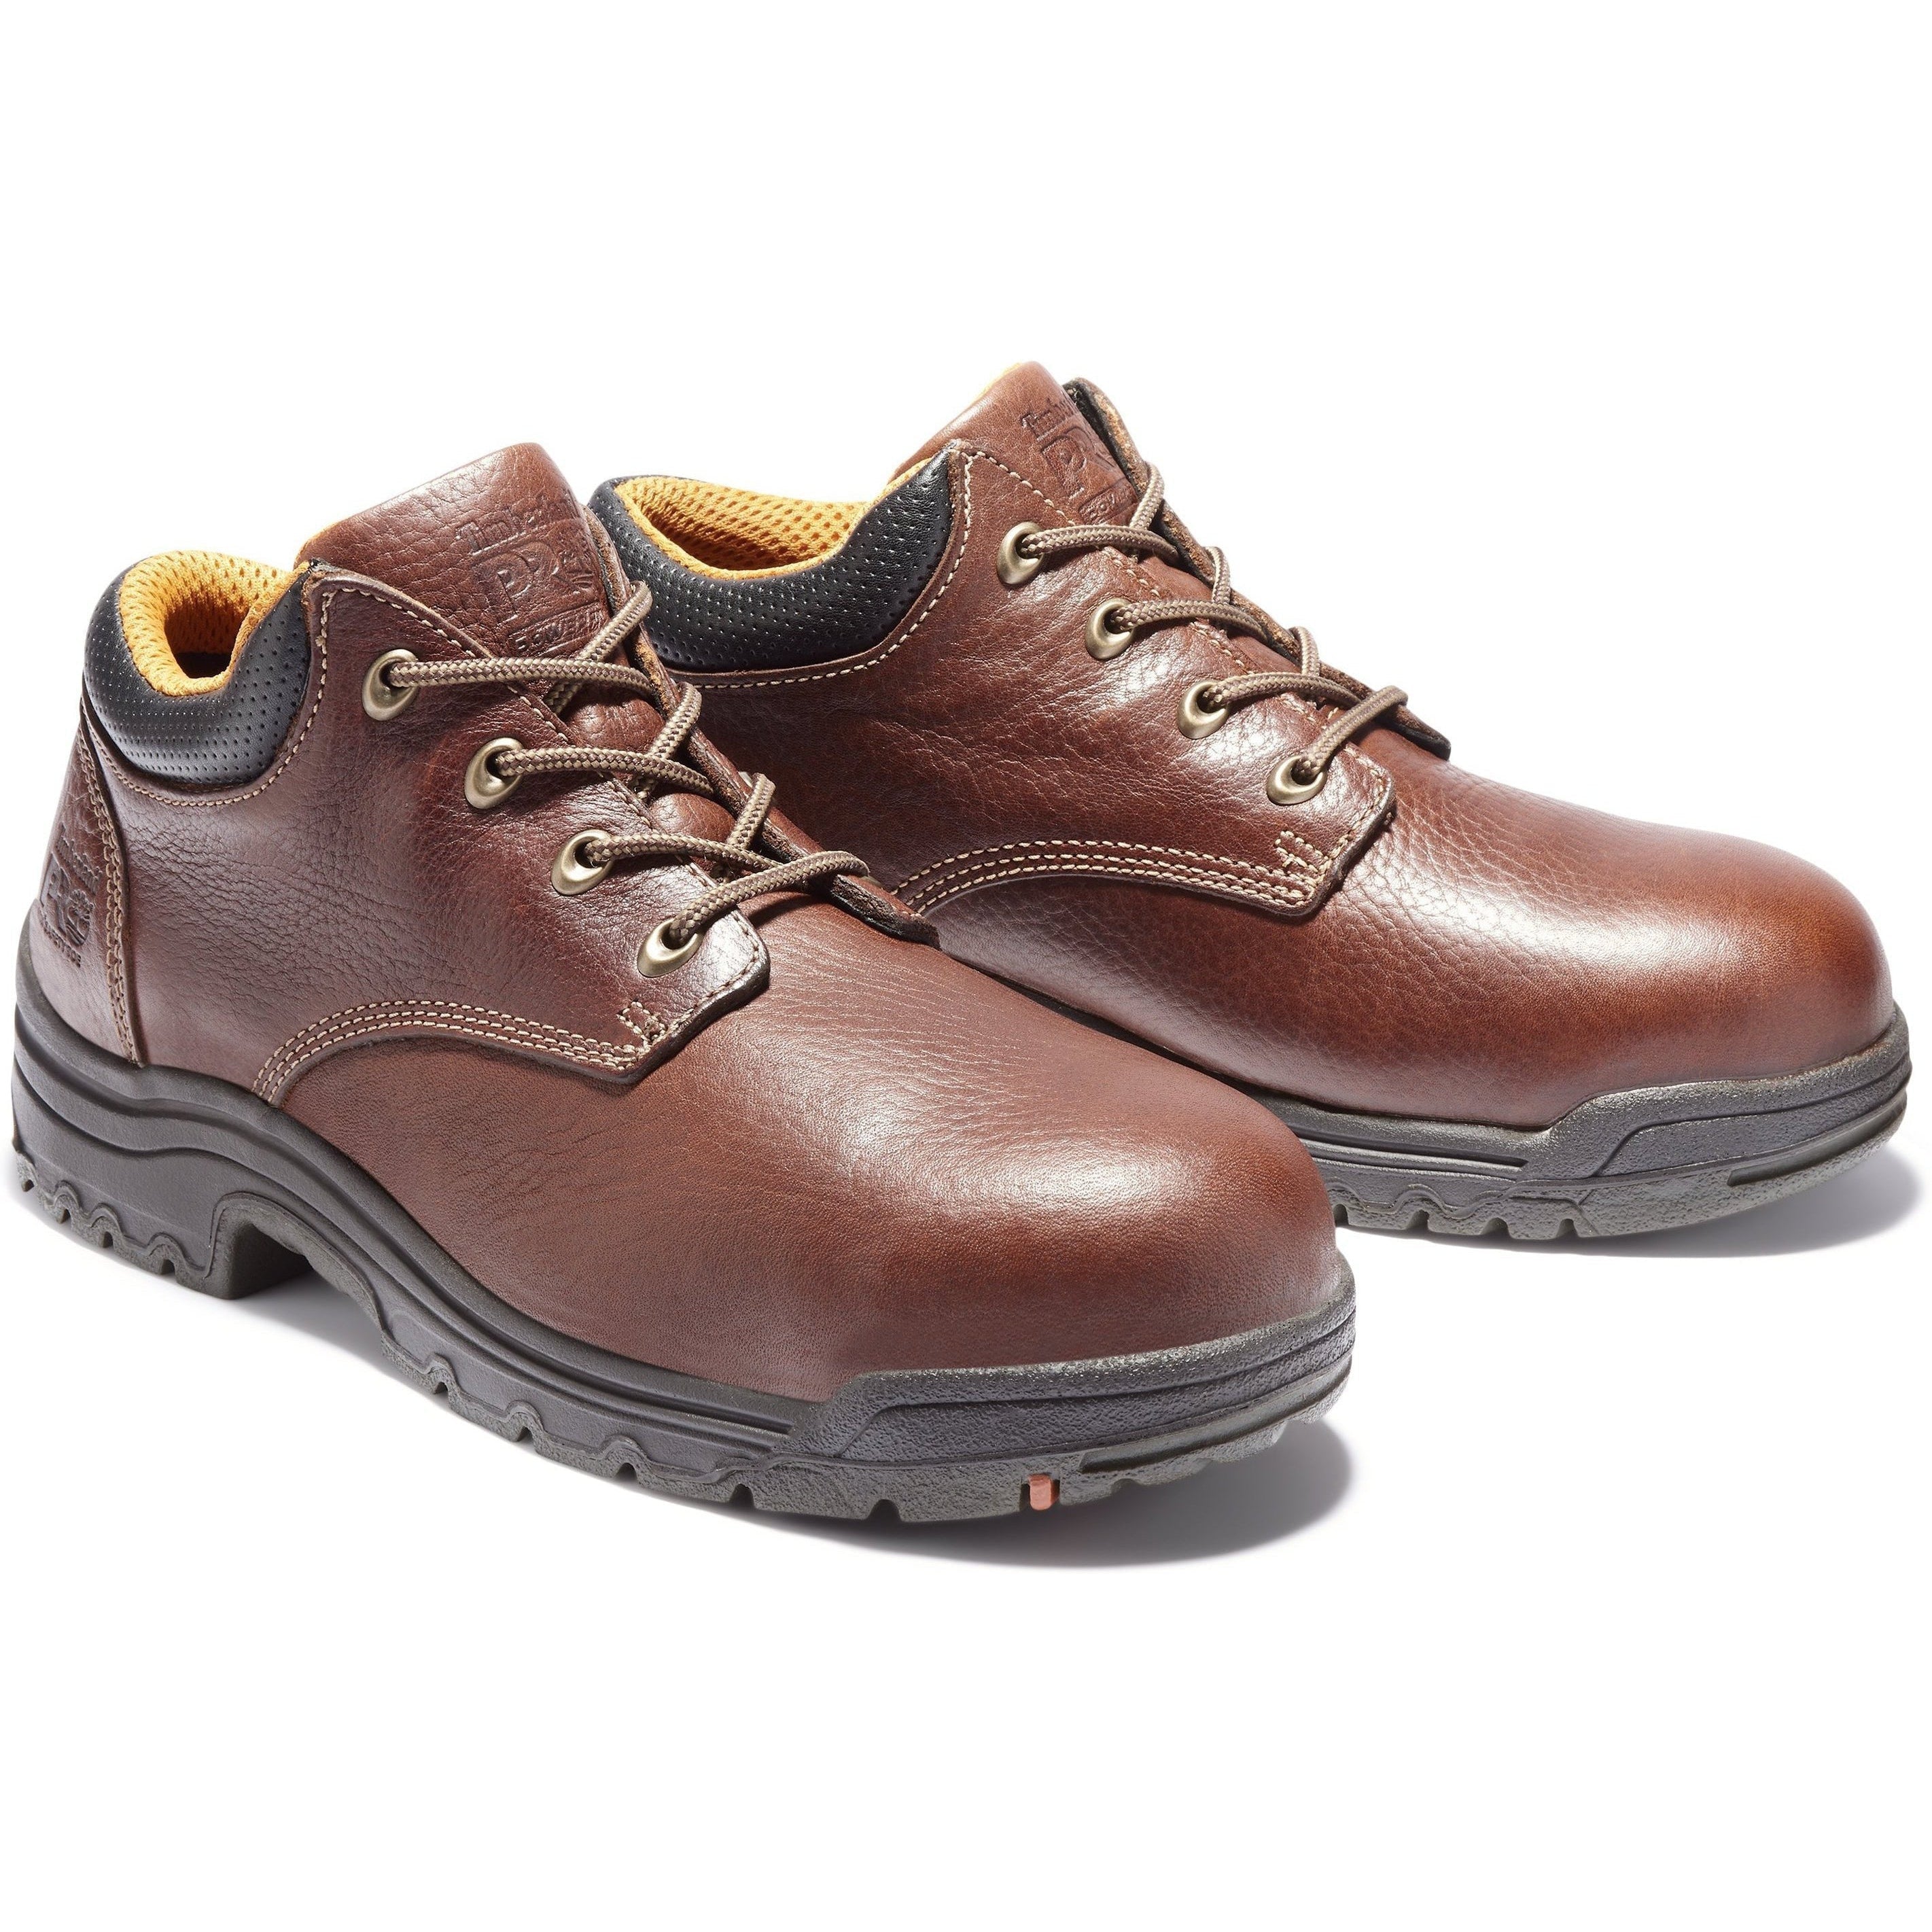 Timberland PRO Men's TiTAN Oxford Alloy Toe Work Shoe Brown TB147028210 7 / Medium / Brown - Overlook Boots